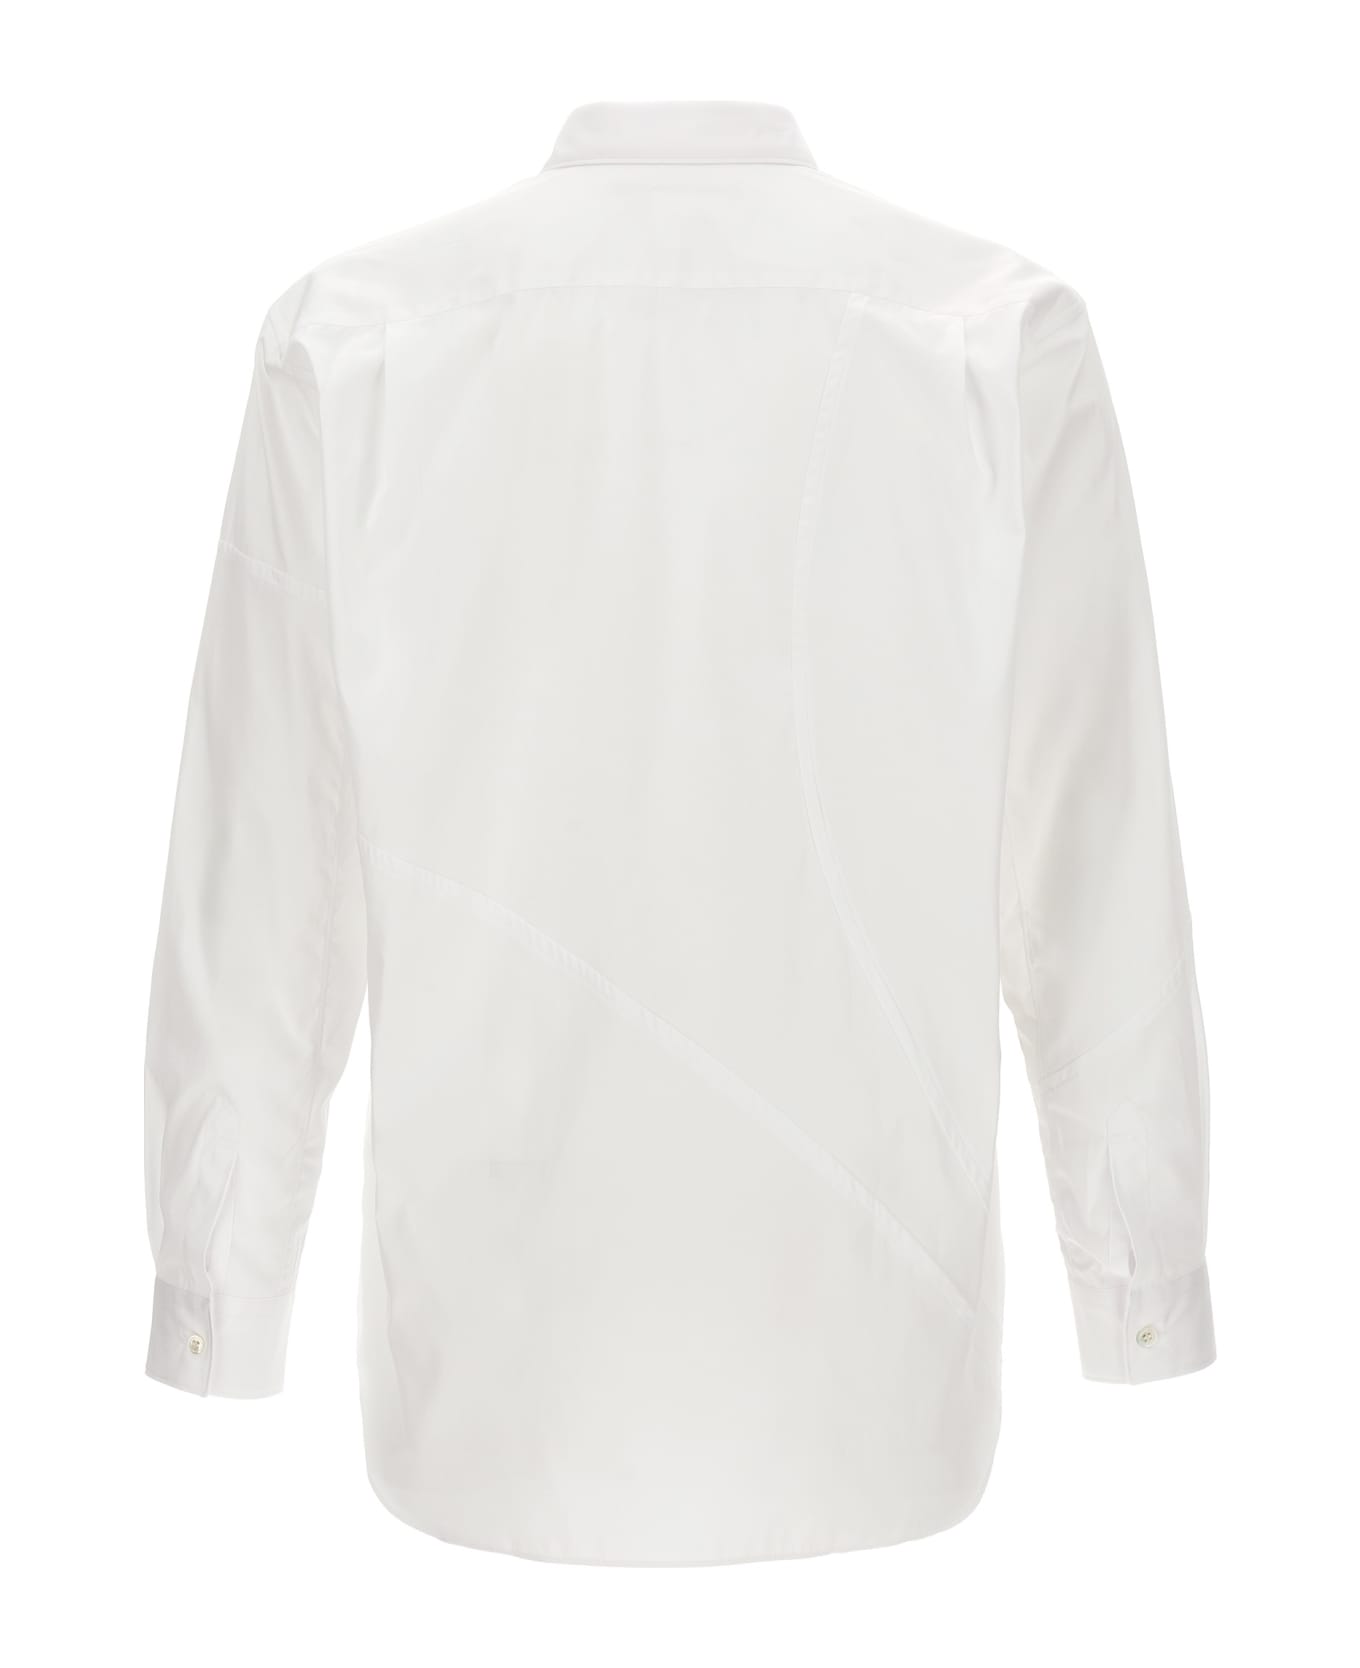 Comme des Garçons Shirt 'andy Warhol' Shirt - White シャツ